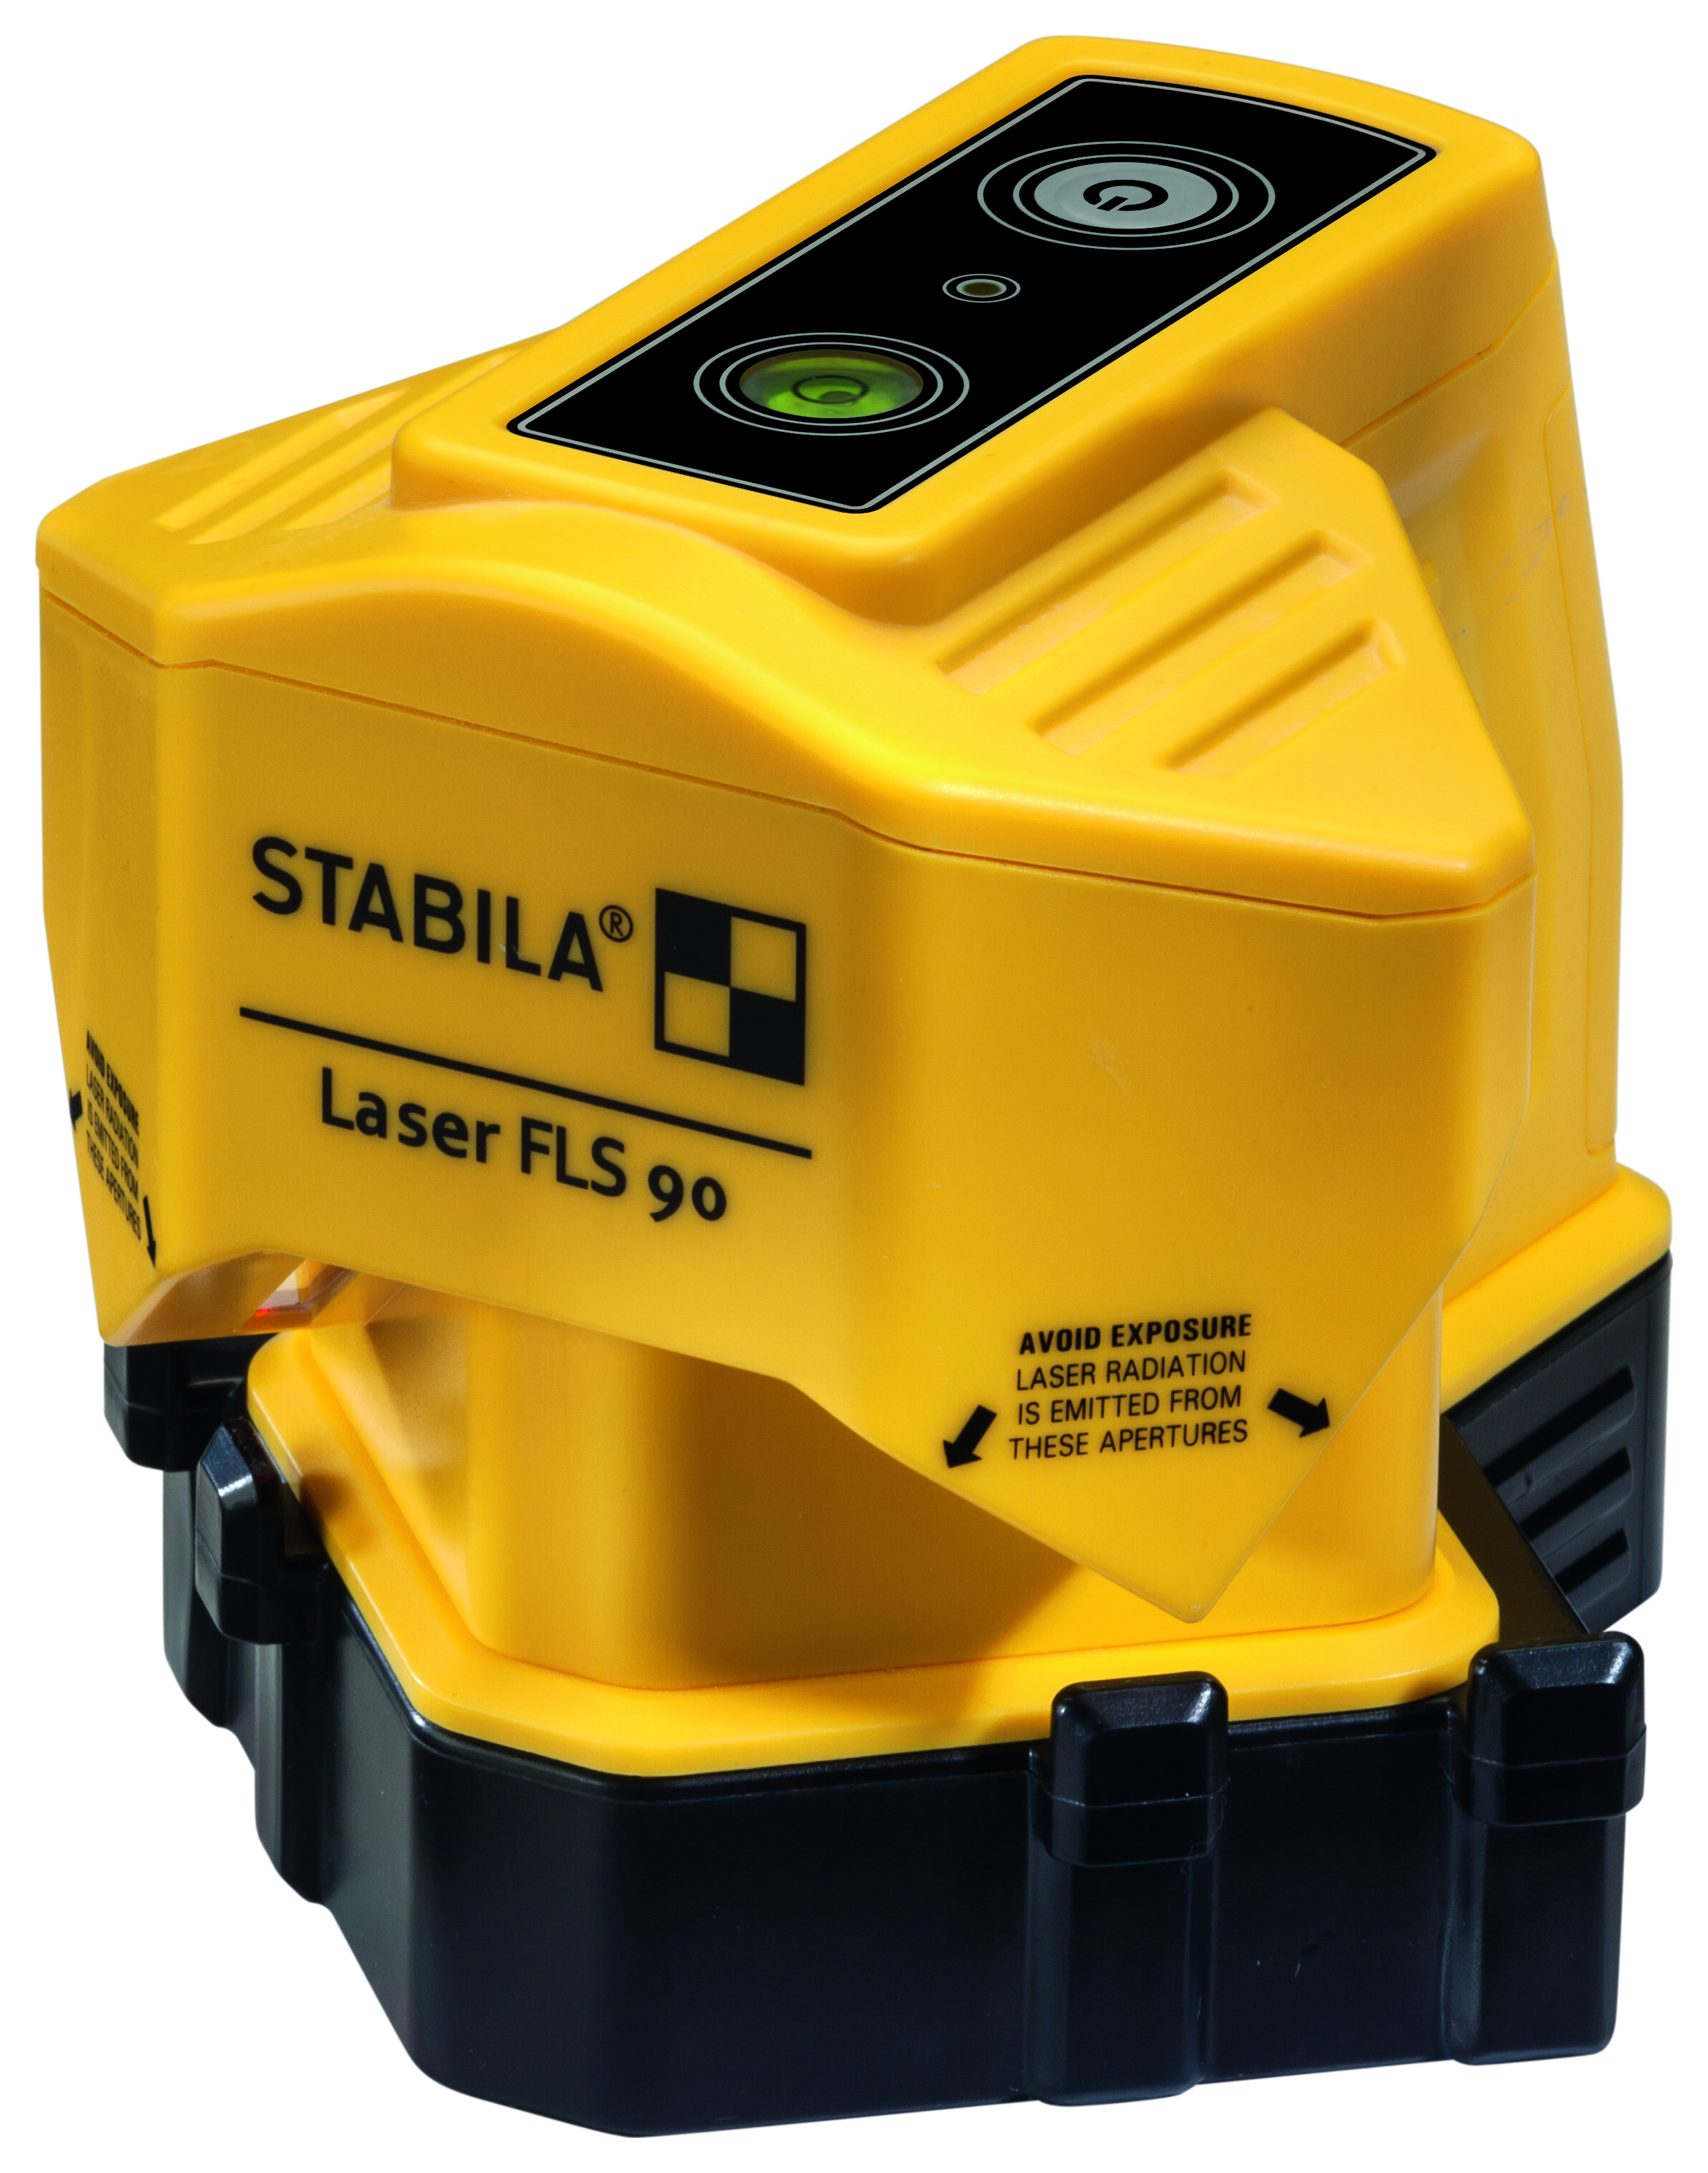 Image of Stablia STB-FLS90 90° Floor Line Laser Level